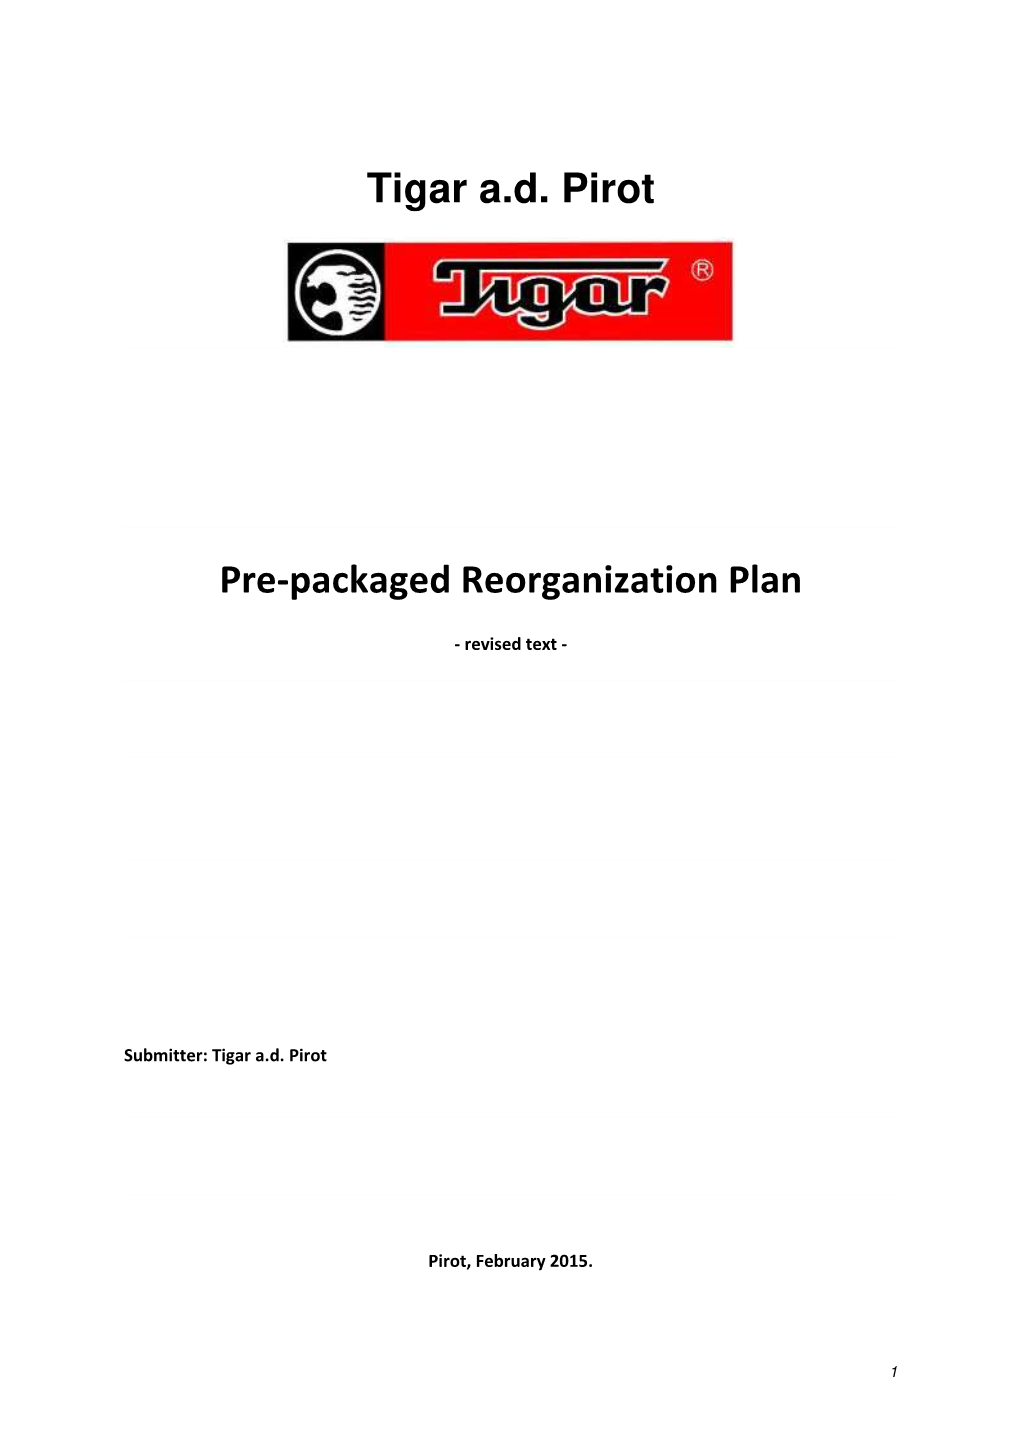 Tigar Ad Pirot Pre-Packaged Reorganization Plan